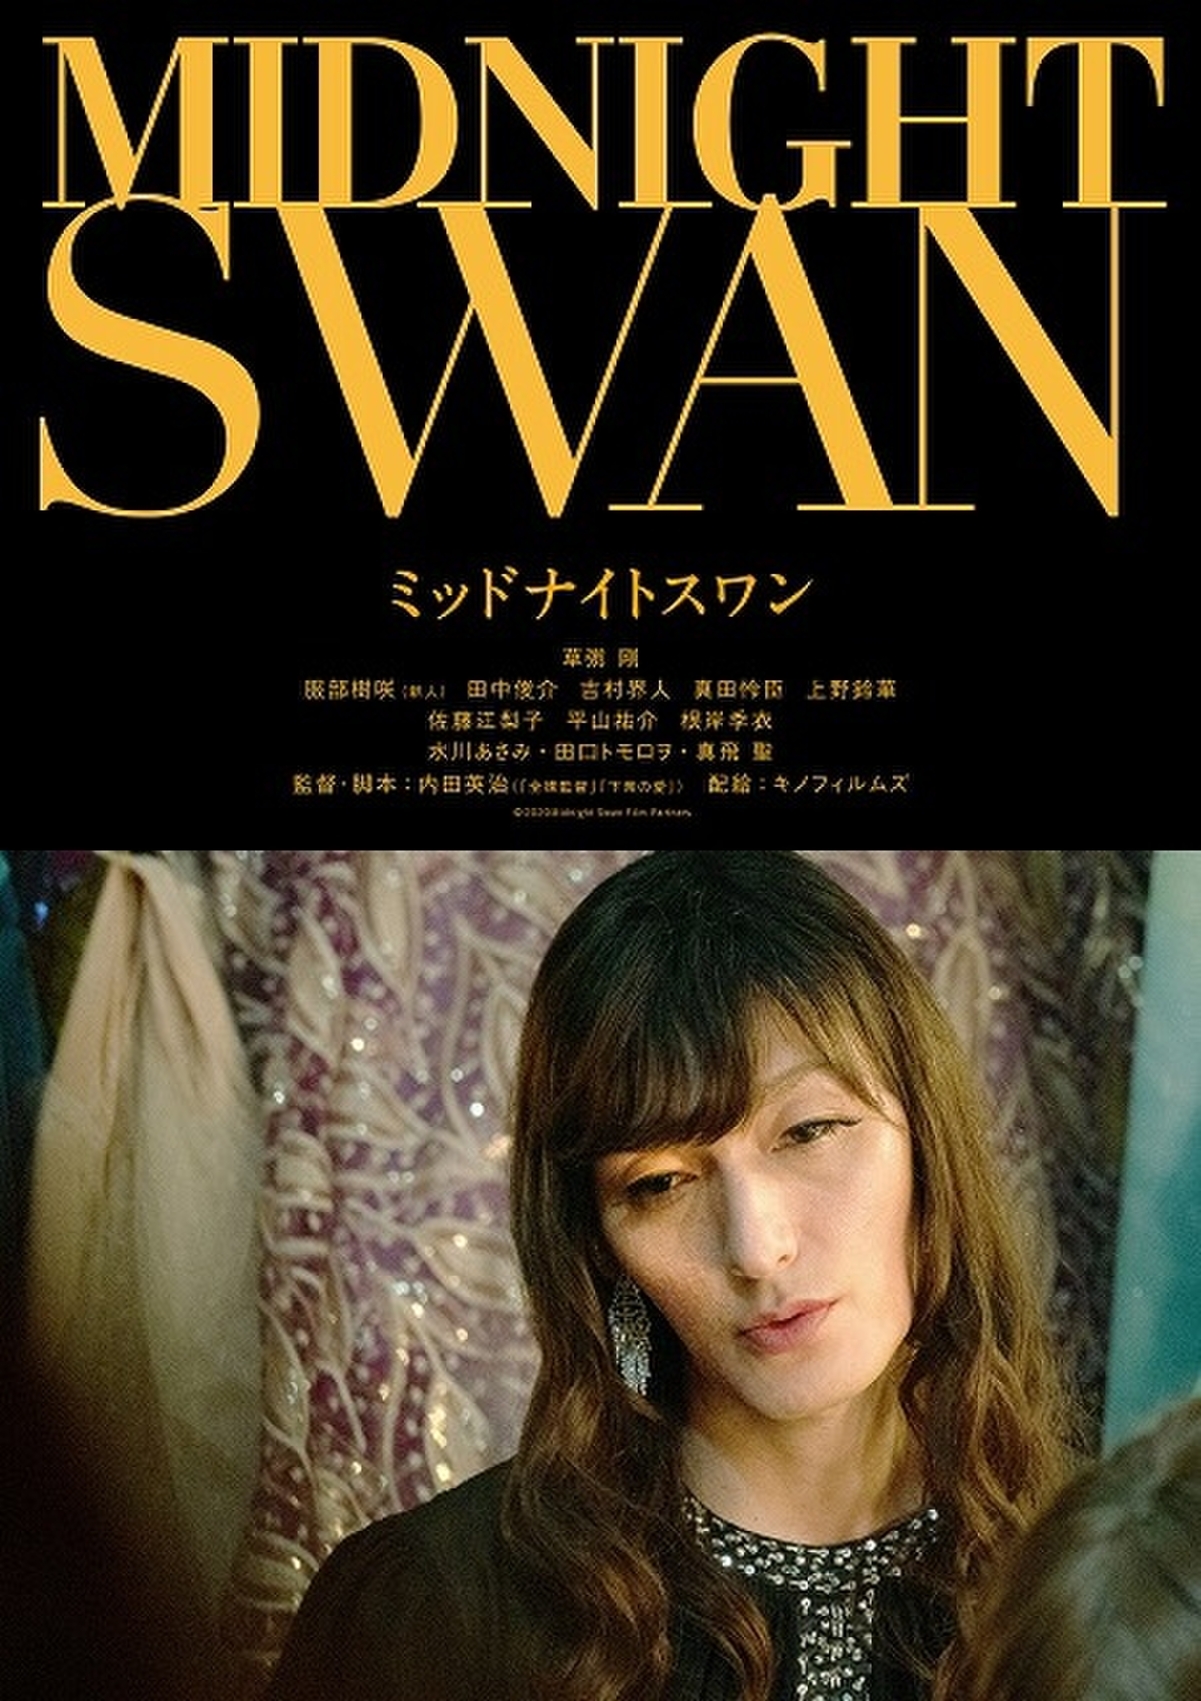 MIDNIGHT SWAN SPECIAL BOX 草彅剛*-eastgate.mk